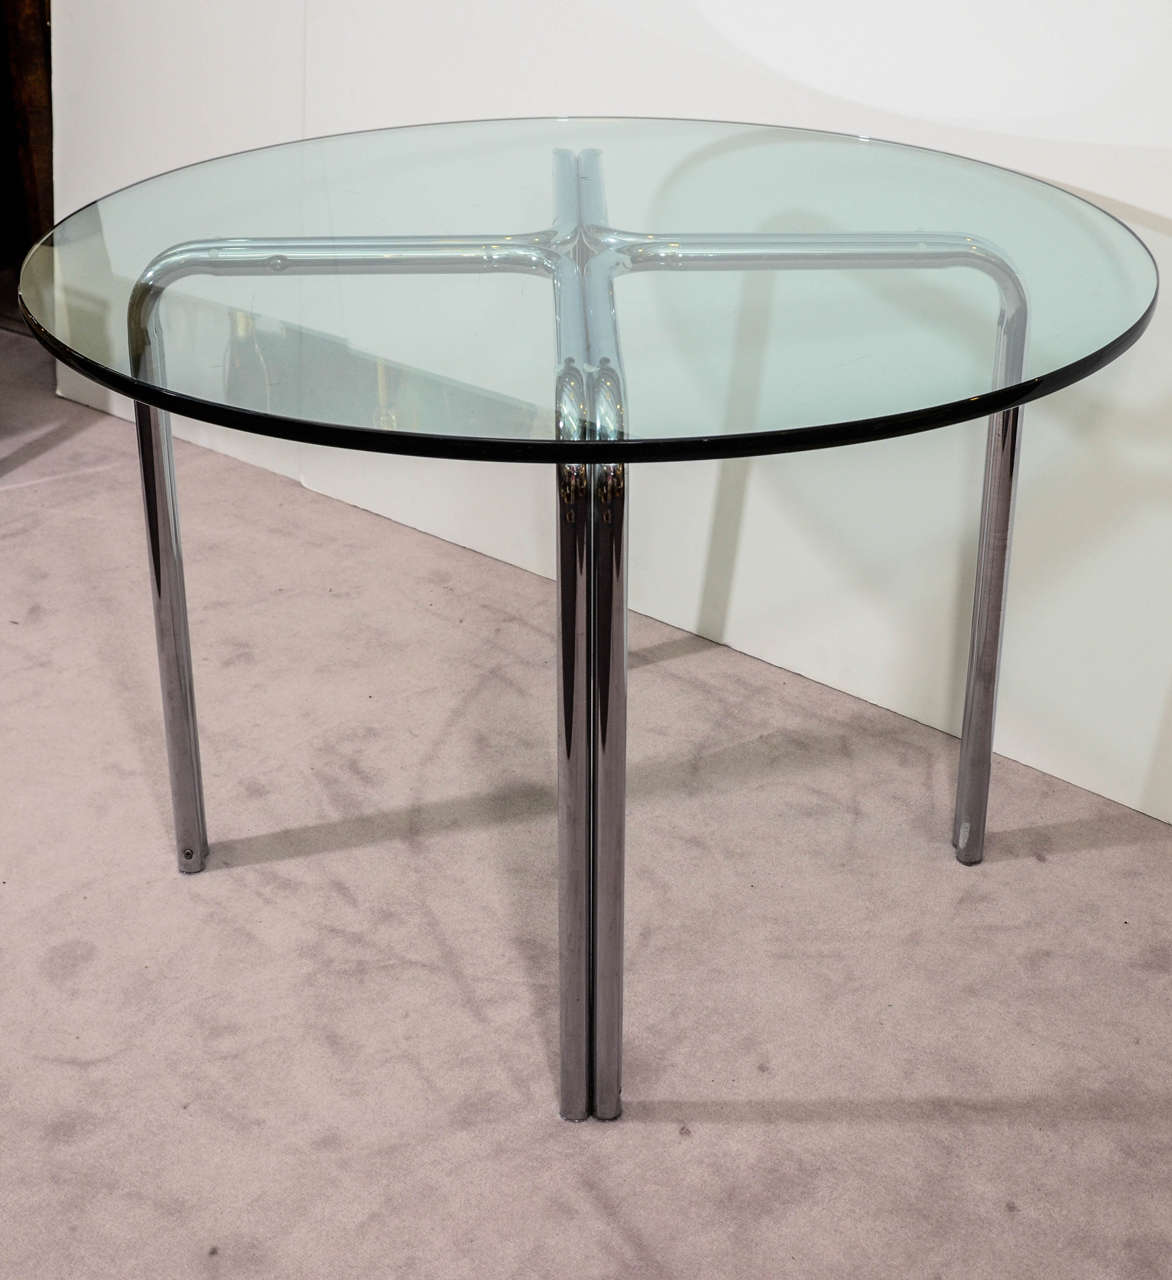 A vintage chrome over tubular steel x-base dining table with a 3/4